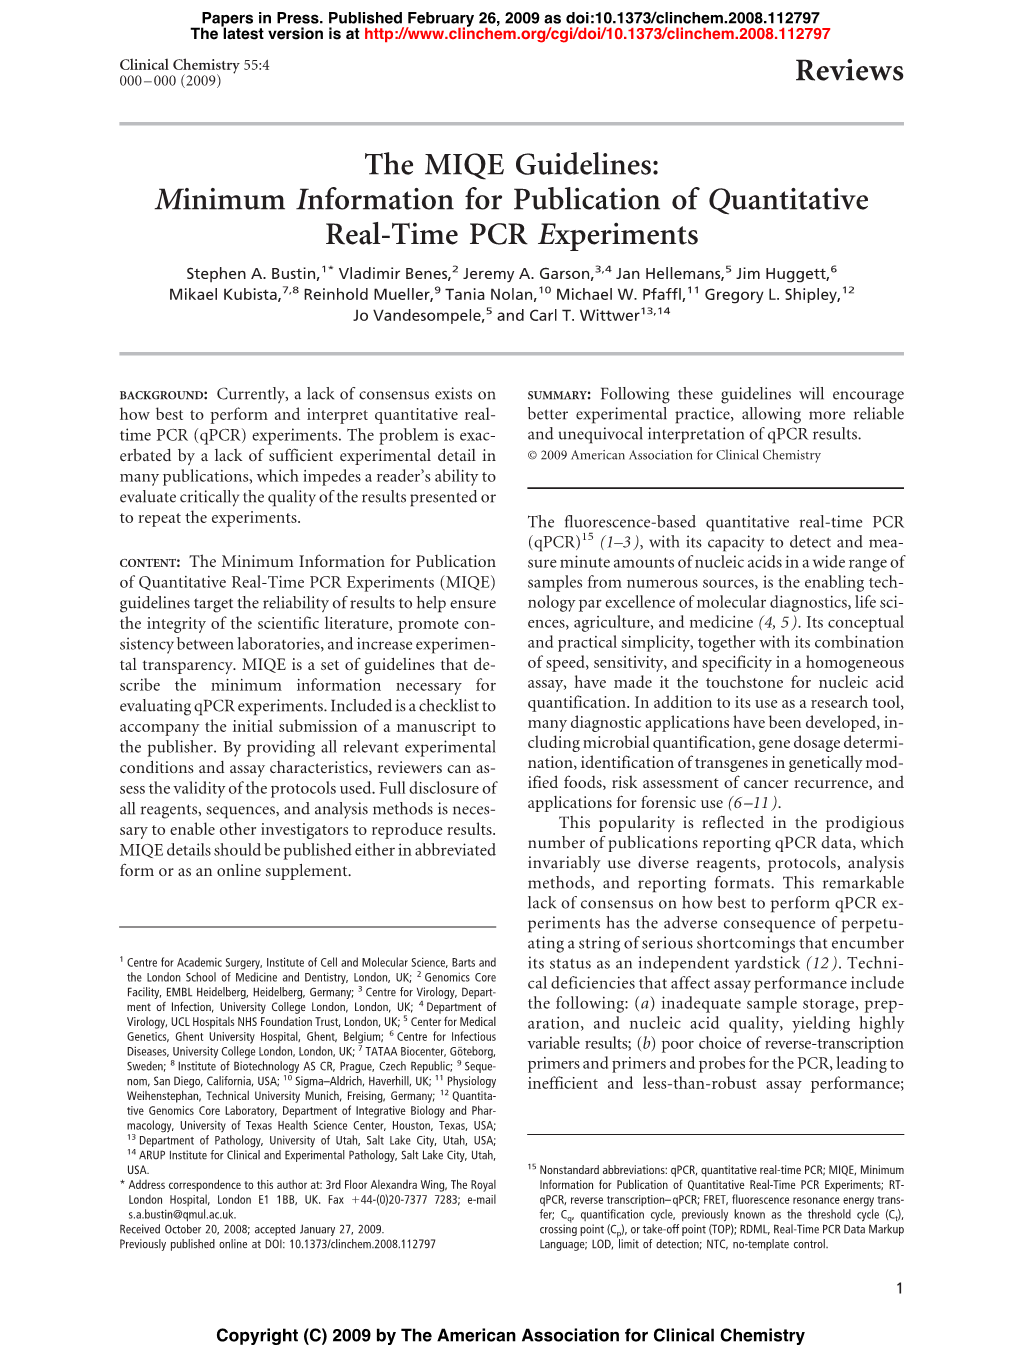 Minimum Information for Publication of Quantitative Real-Time PCR Experiments Stephen A